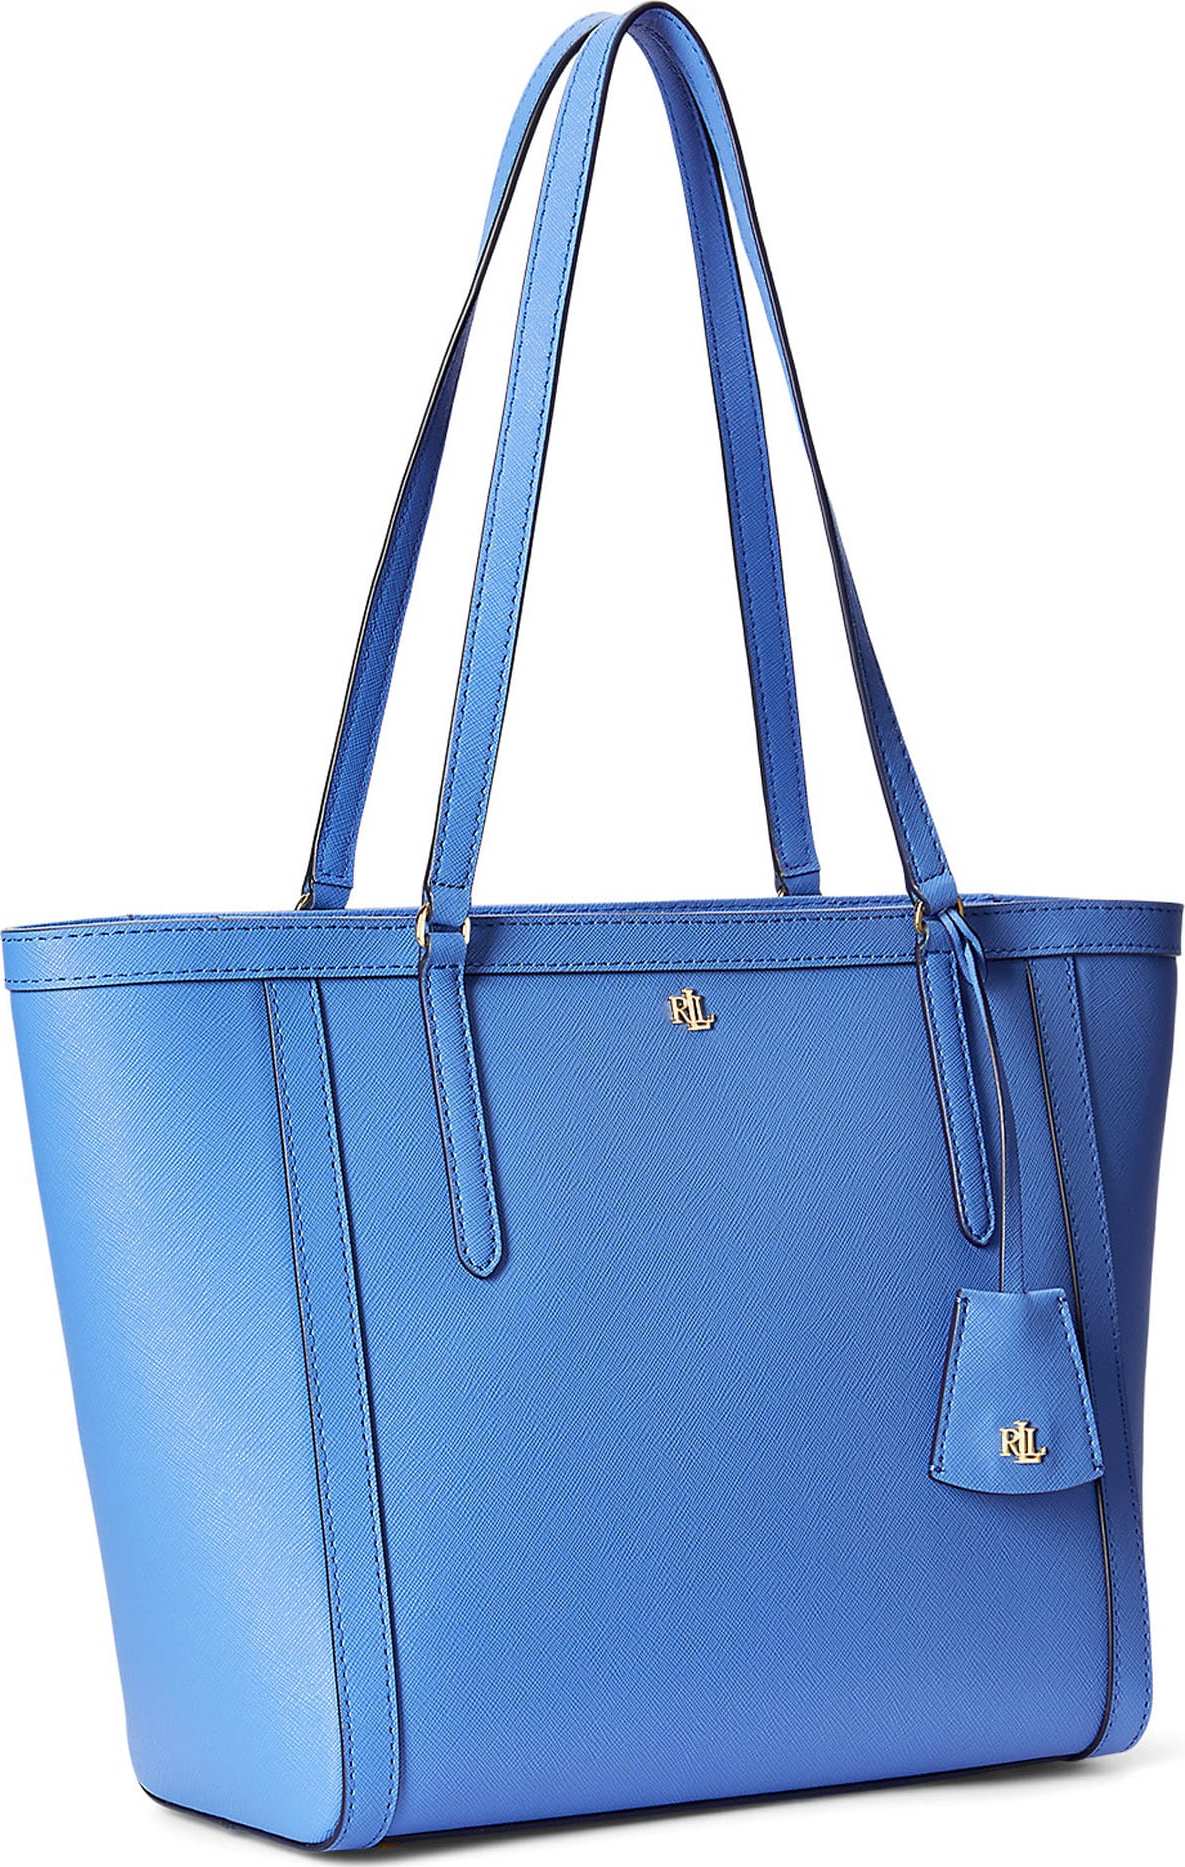 Lauren Ralph Lauren Nákupní taška královská modrá / zlatá